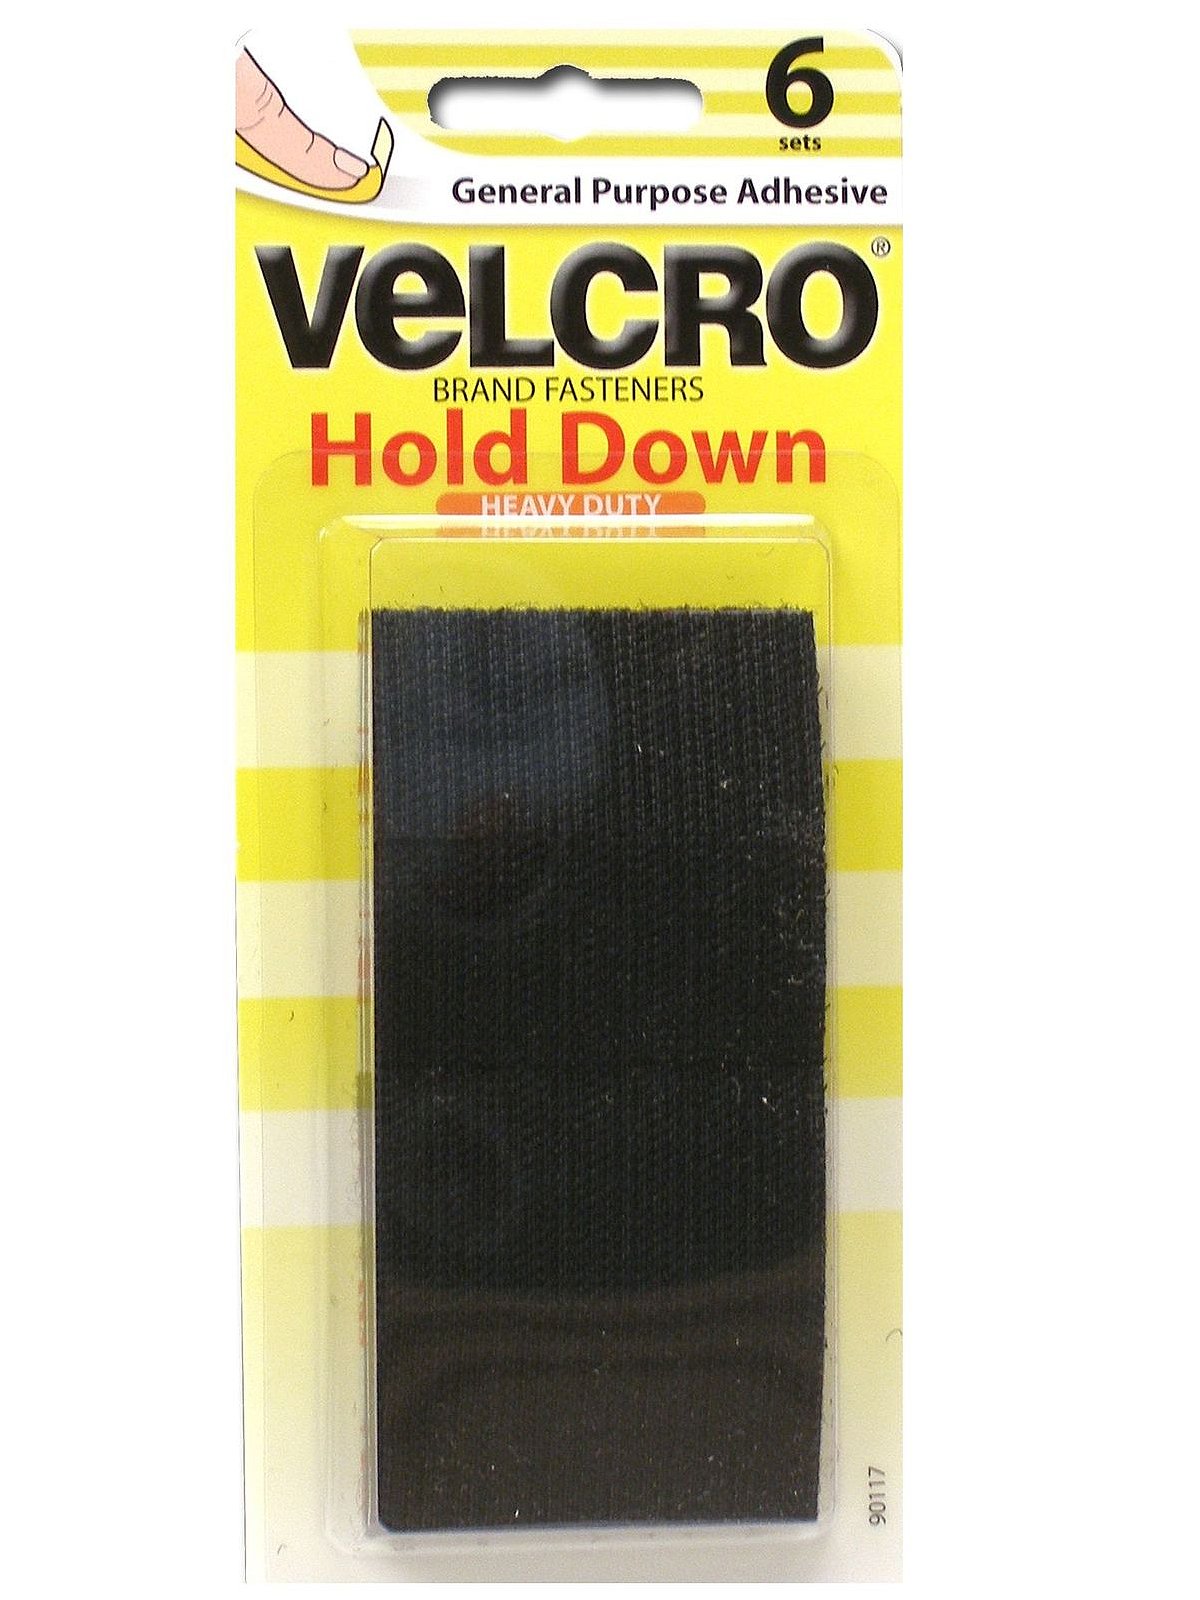 VELCRO Brand 180-in Industrial Strength 15Ft X 2In Roll White Hook